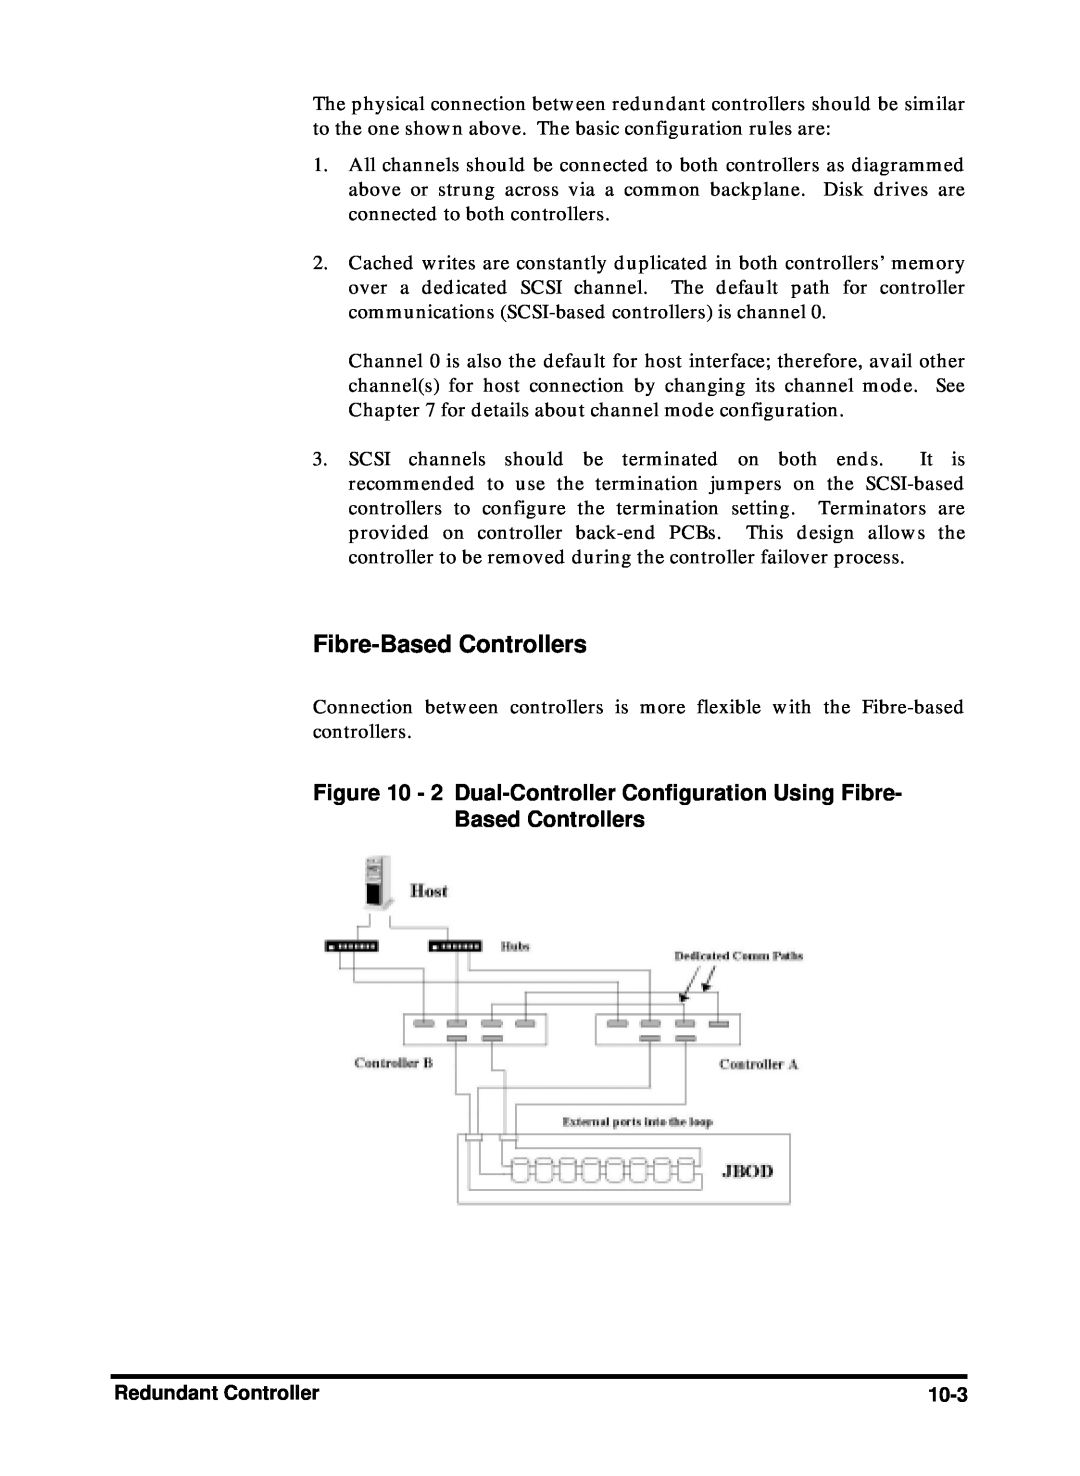 Compaq Infortrend manual Fibre-Based Controllers 